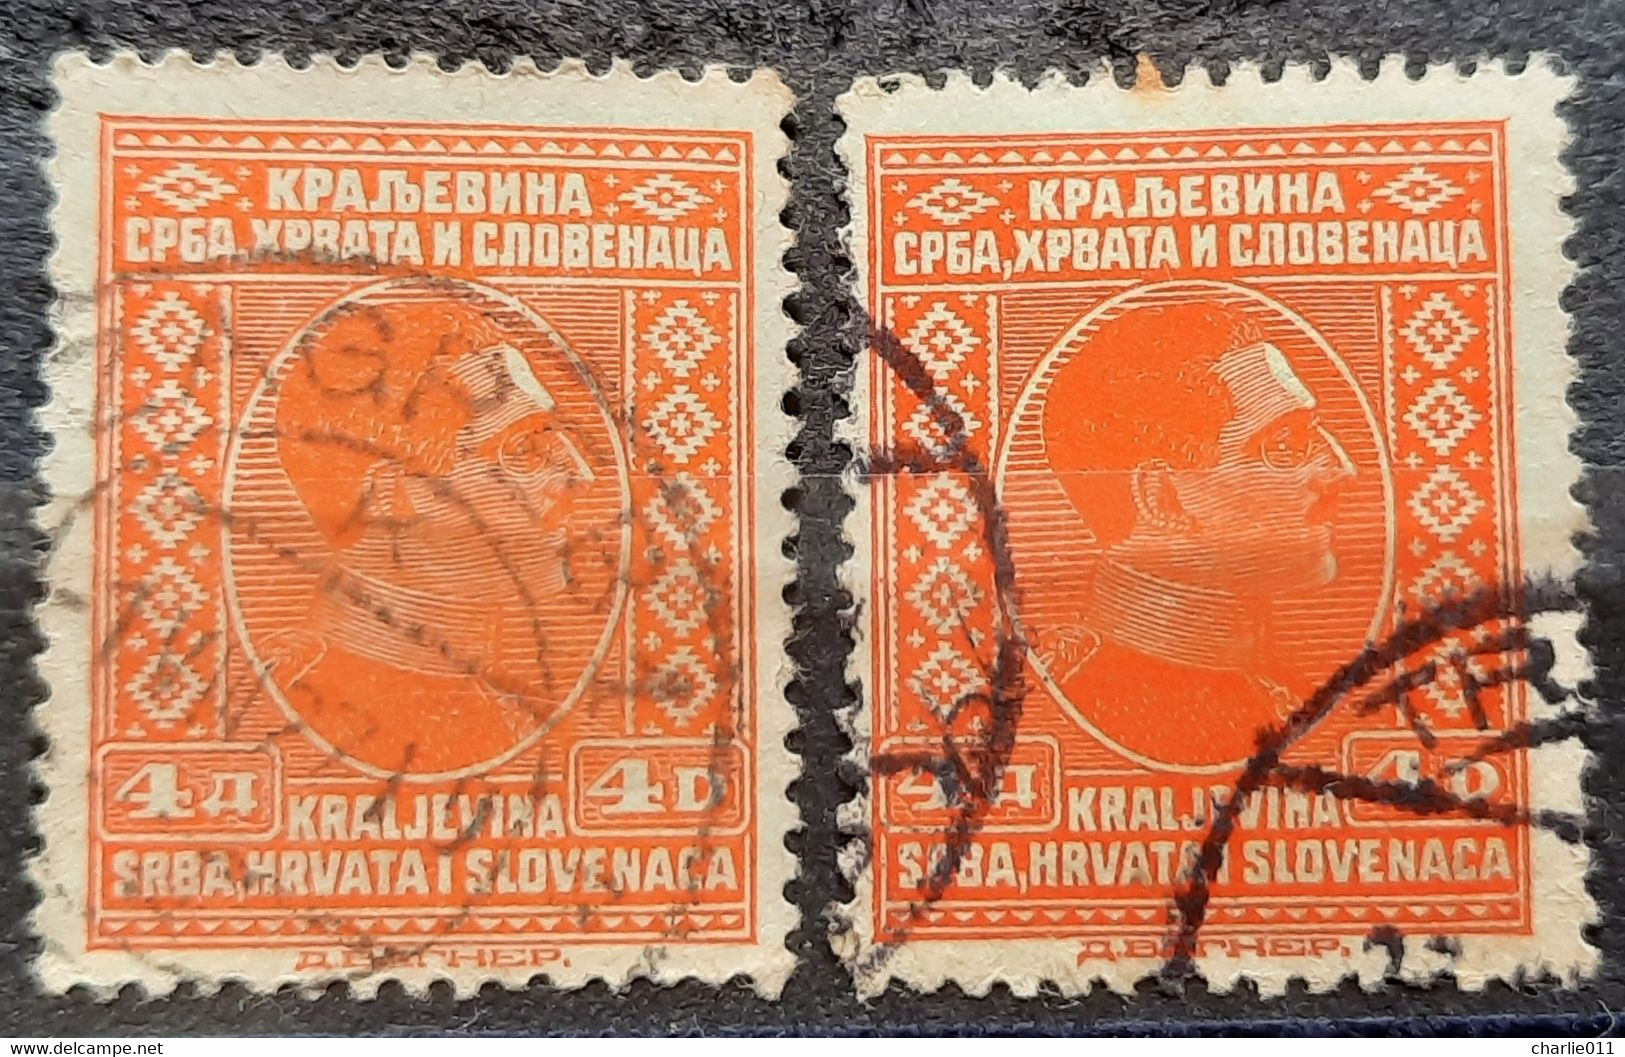 Used stamps - KING ALEXANDER-4 D-VARIATION-SHS-CROATIA-YUGOSLAVIA-1926